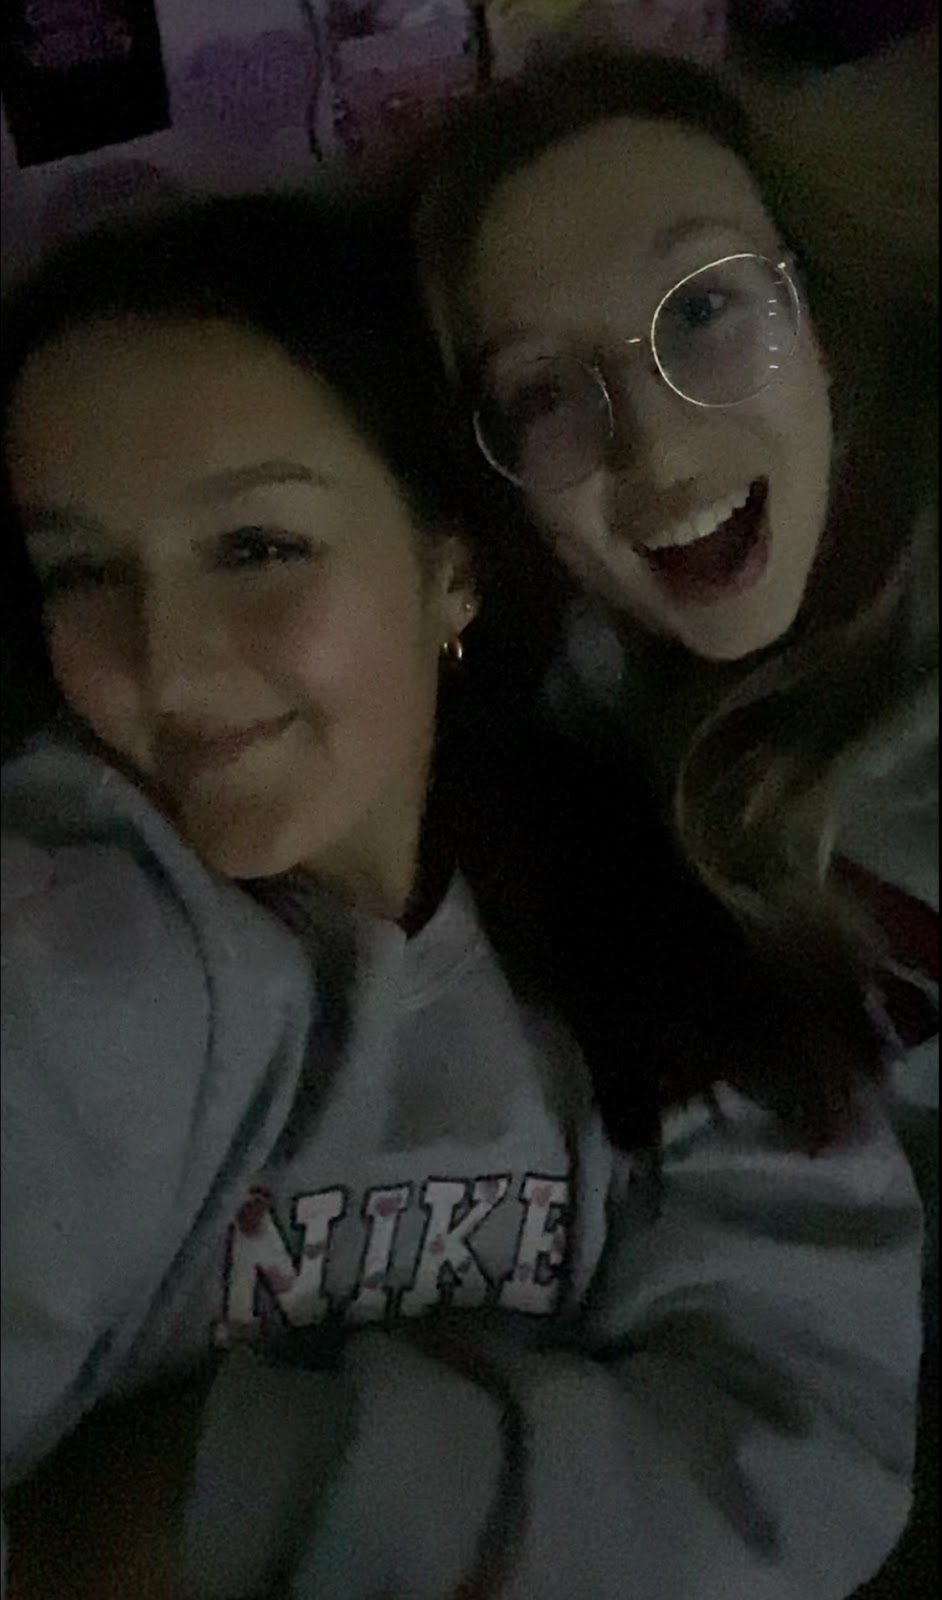 Chloe and roommate taking a selfie in a dark room